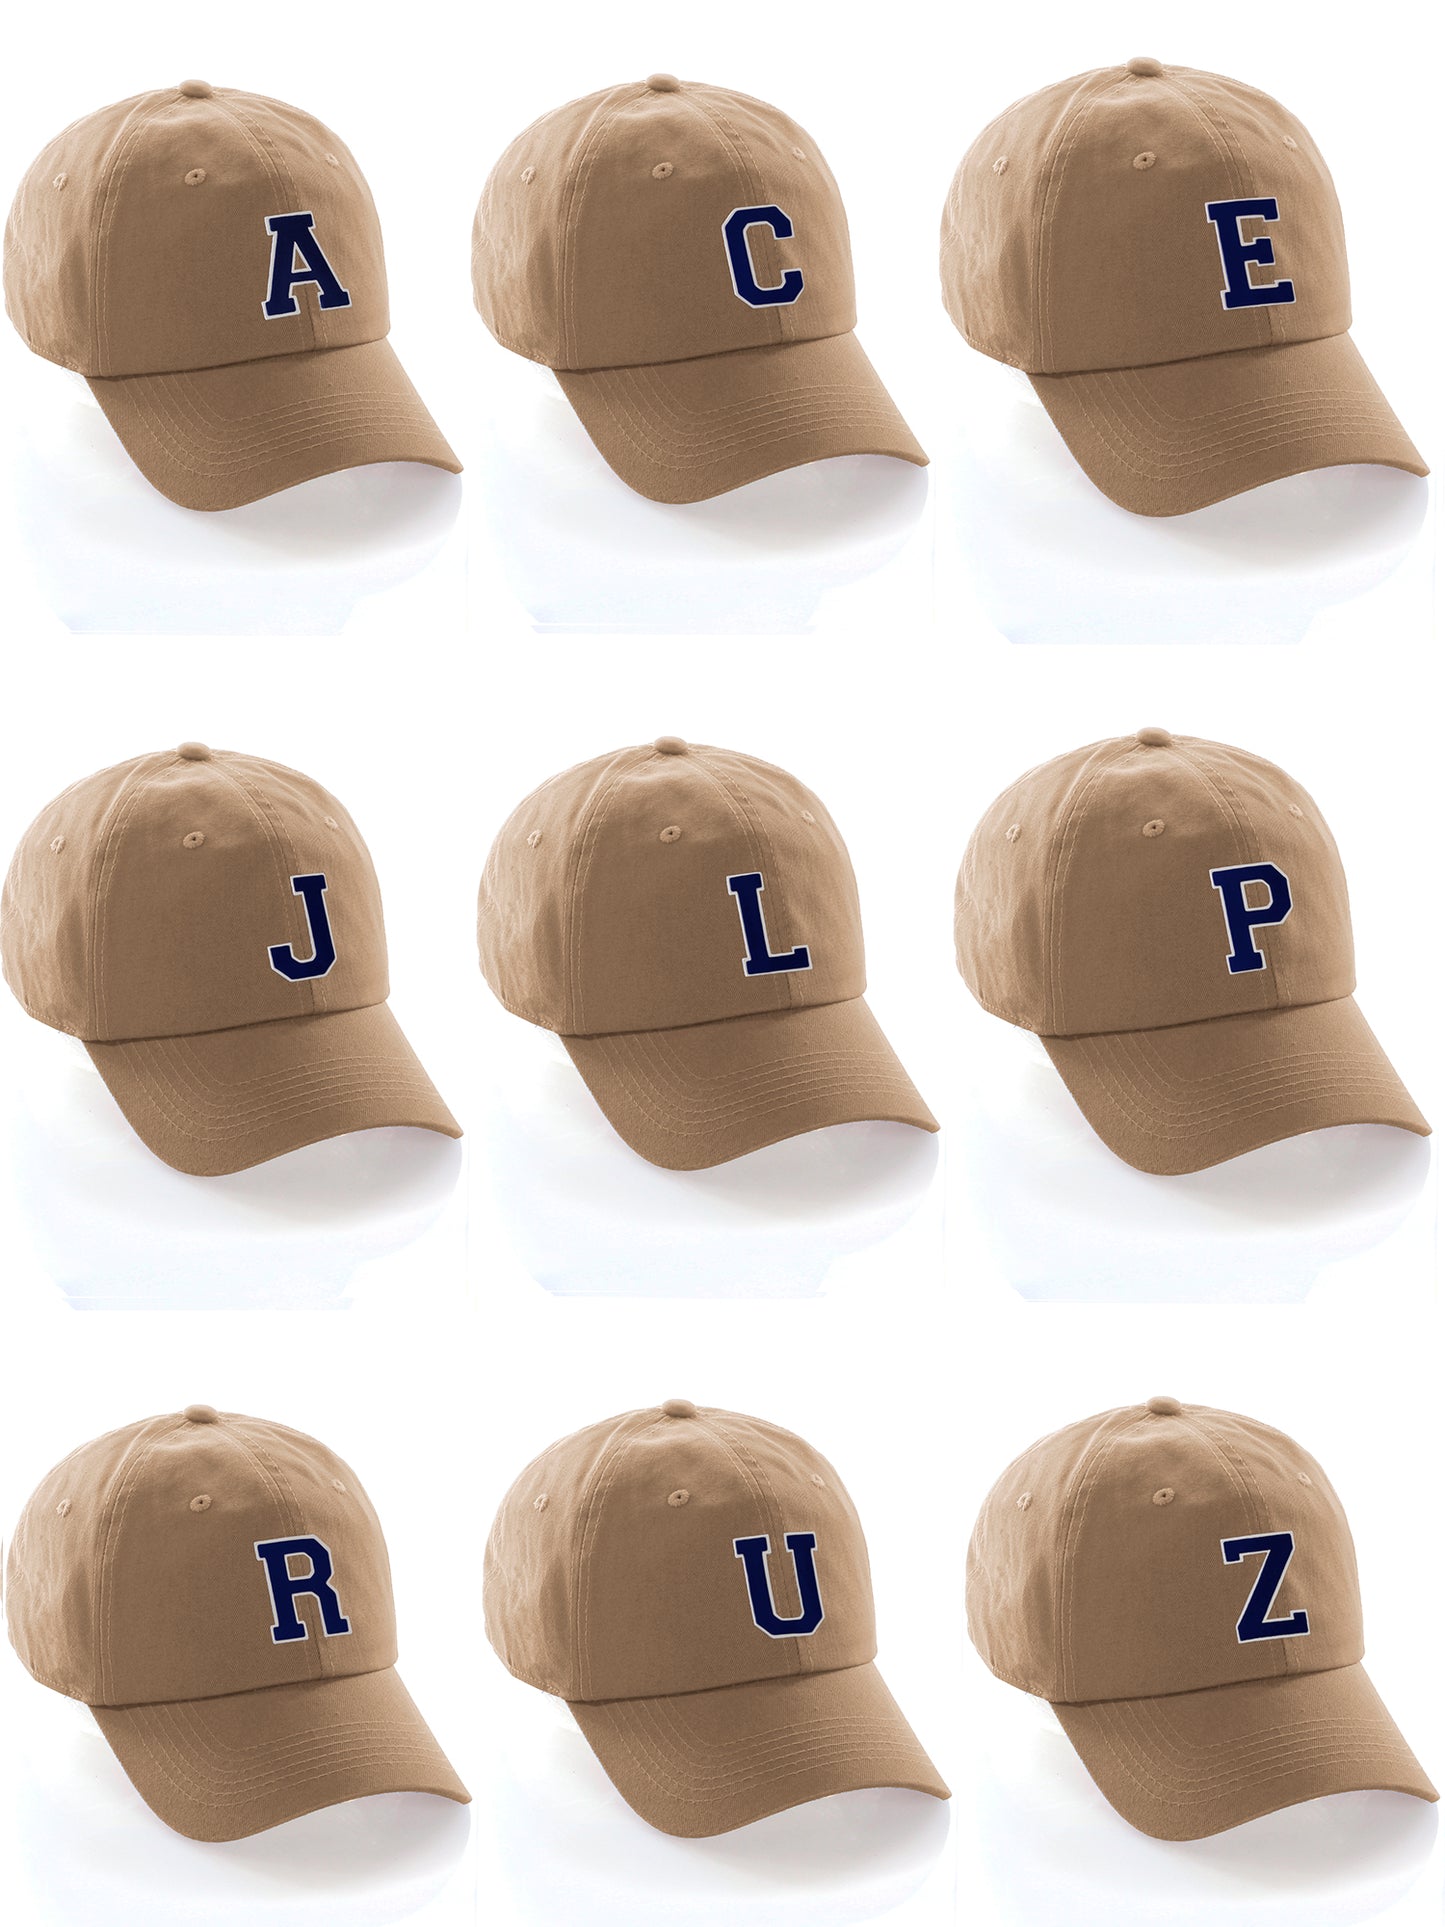 I&W Hatgear Customized Letter Initial Baseball Hat A to Z Team Colors, Khaki Cap White Navy